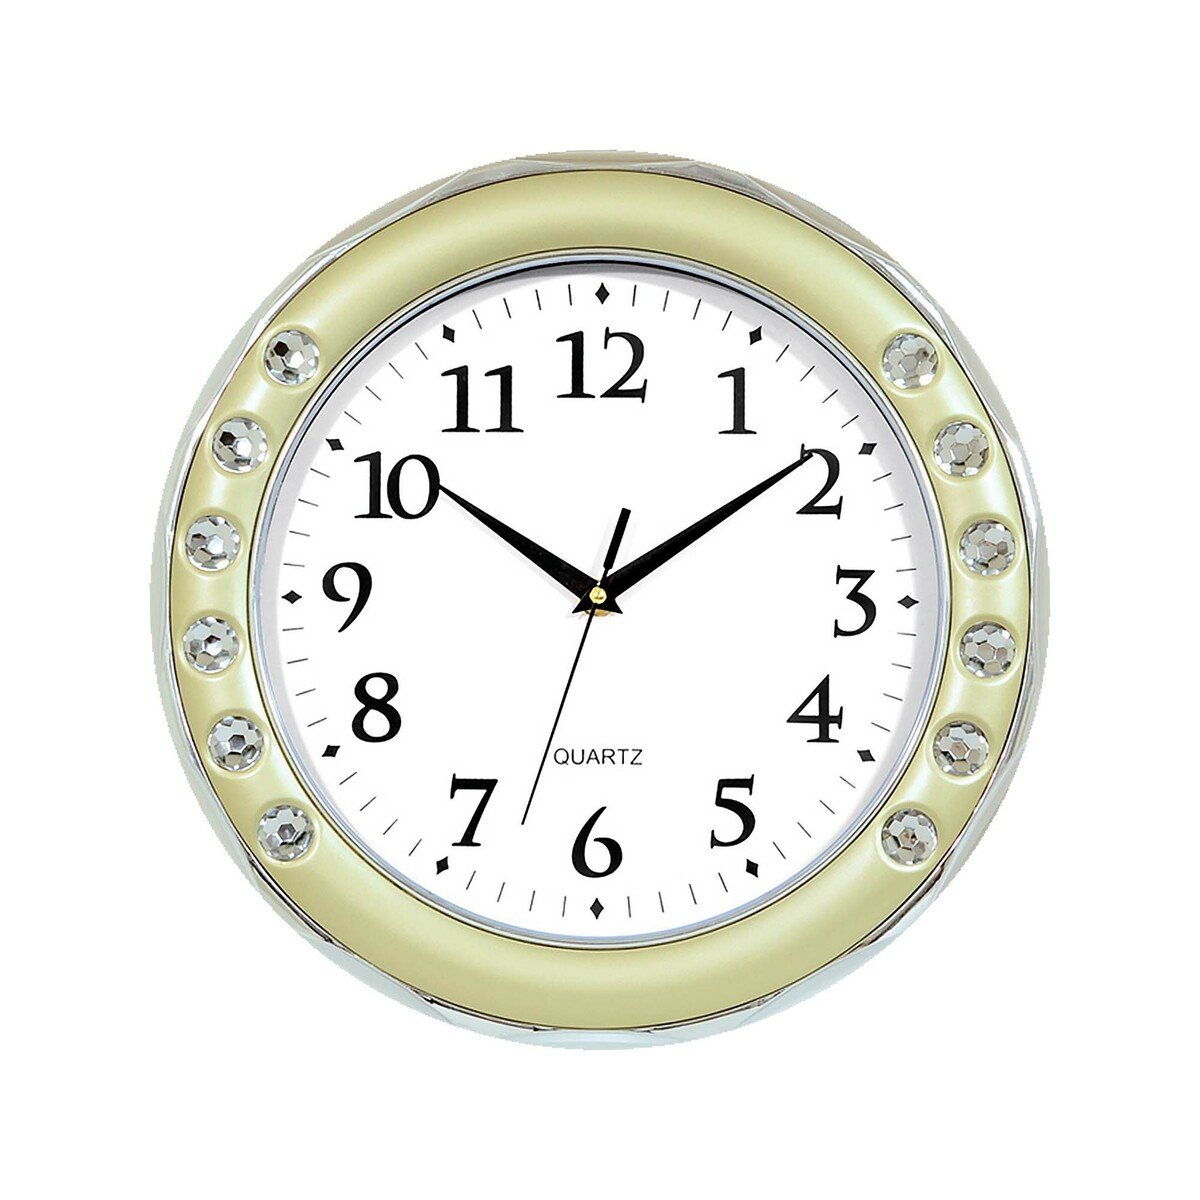 Maple Leaf Wall Clock TLD6915 33.3cm Assorted